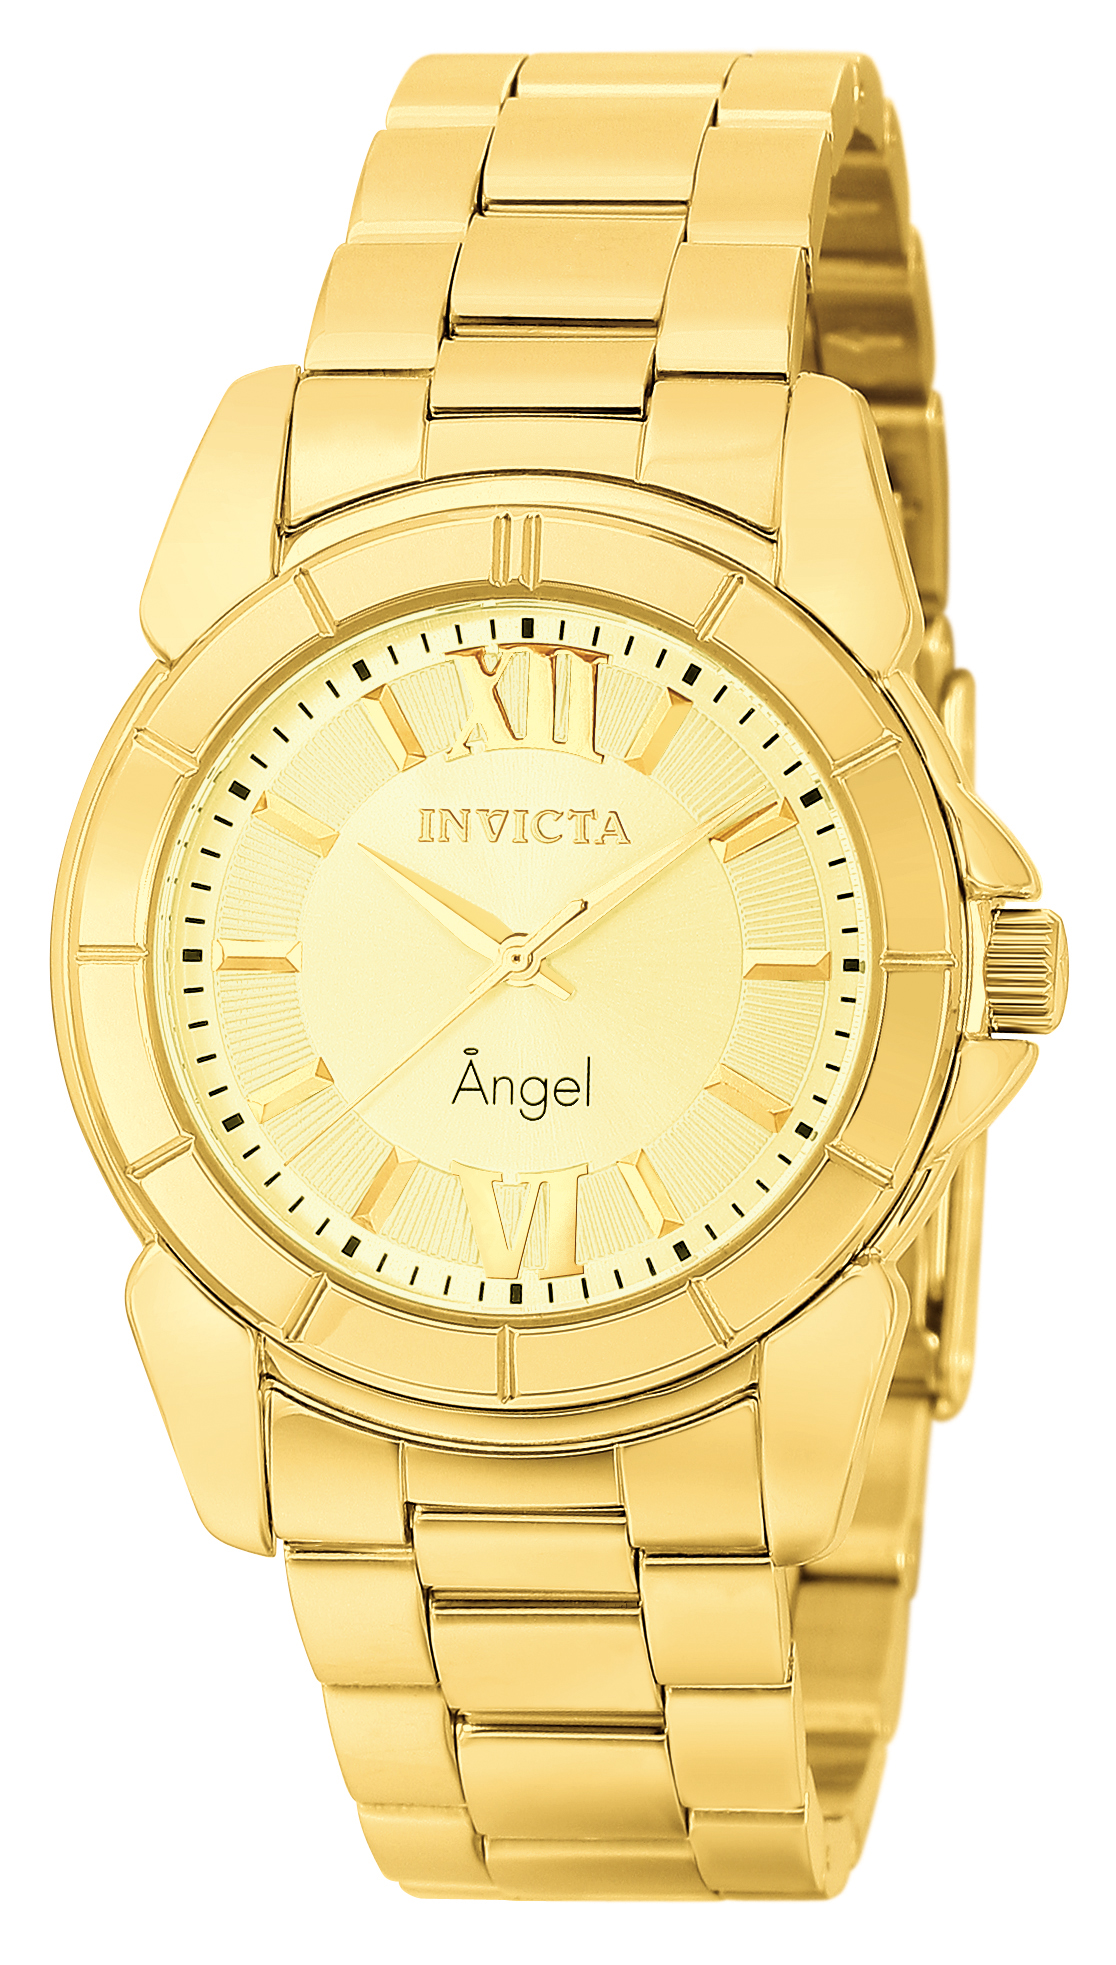 Invicta Angel Women's Watch - 38mm, Gold (0459)